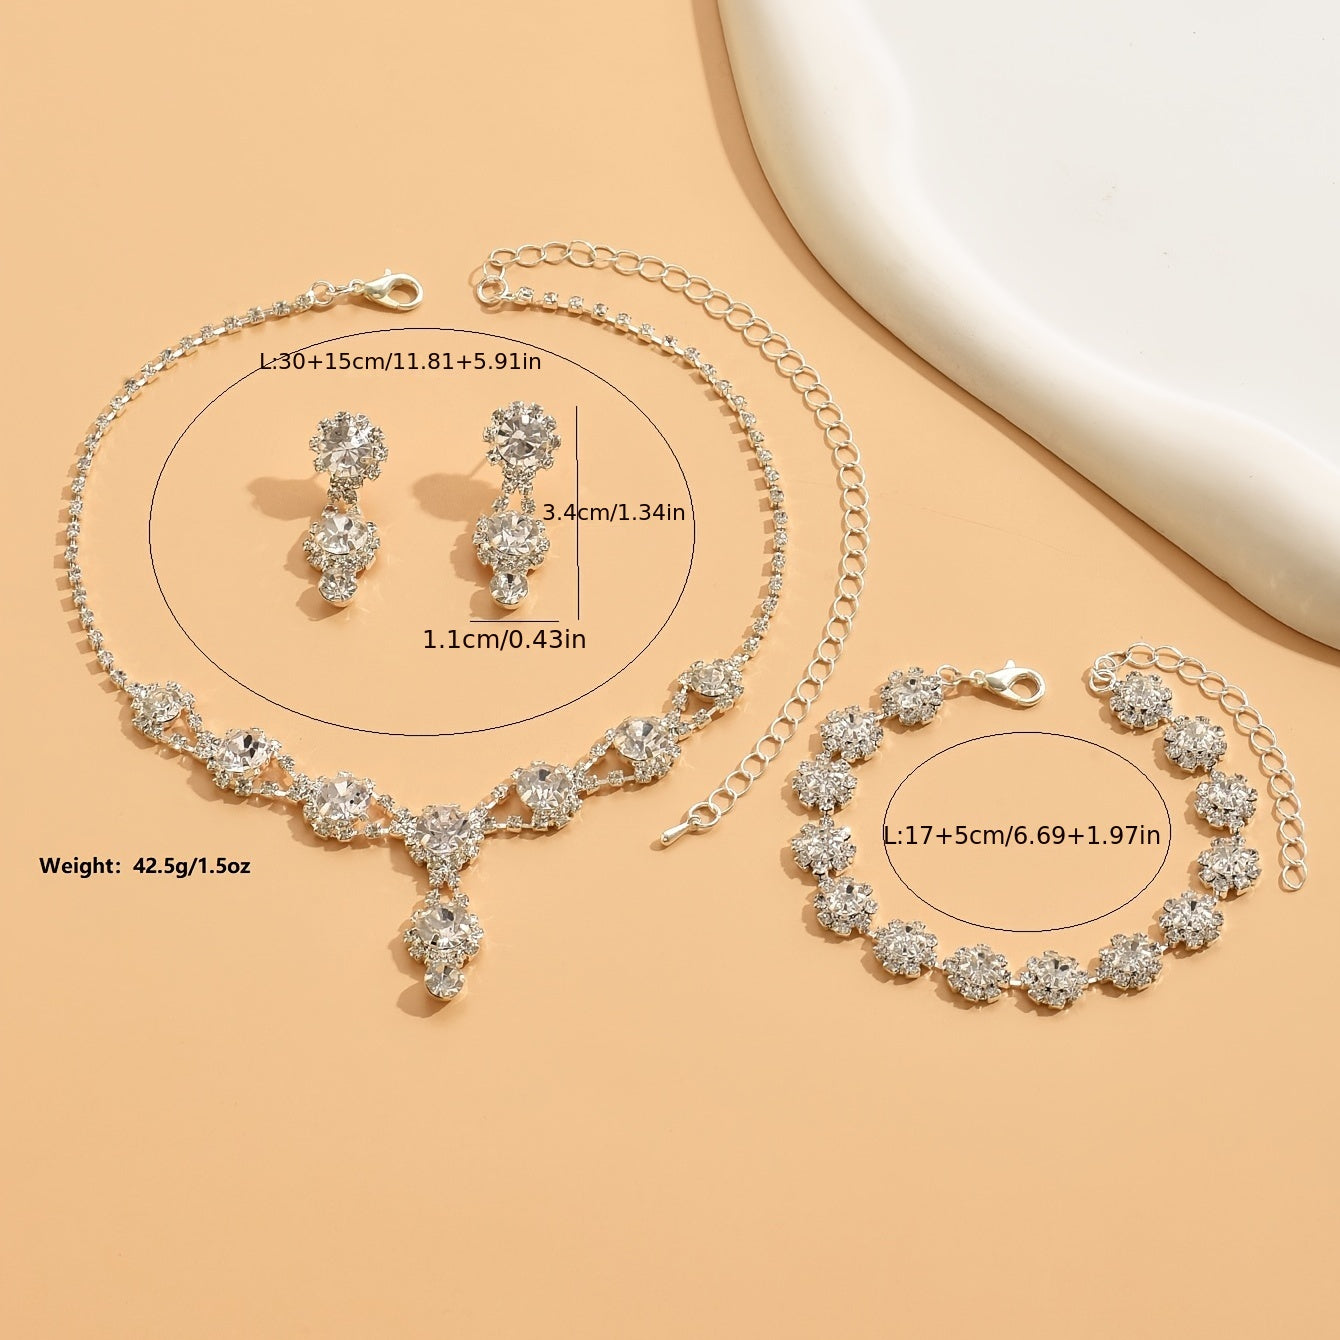 4pcs Necklace Bracelet Plus Earrings Elegant Jewelry Set Silver Plated Inlaid Rhinestone Engagement Wedding Jewelry Evening Party Decor